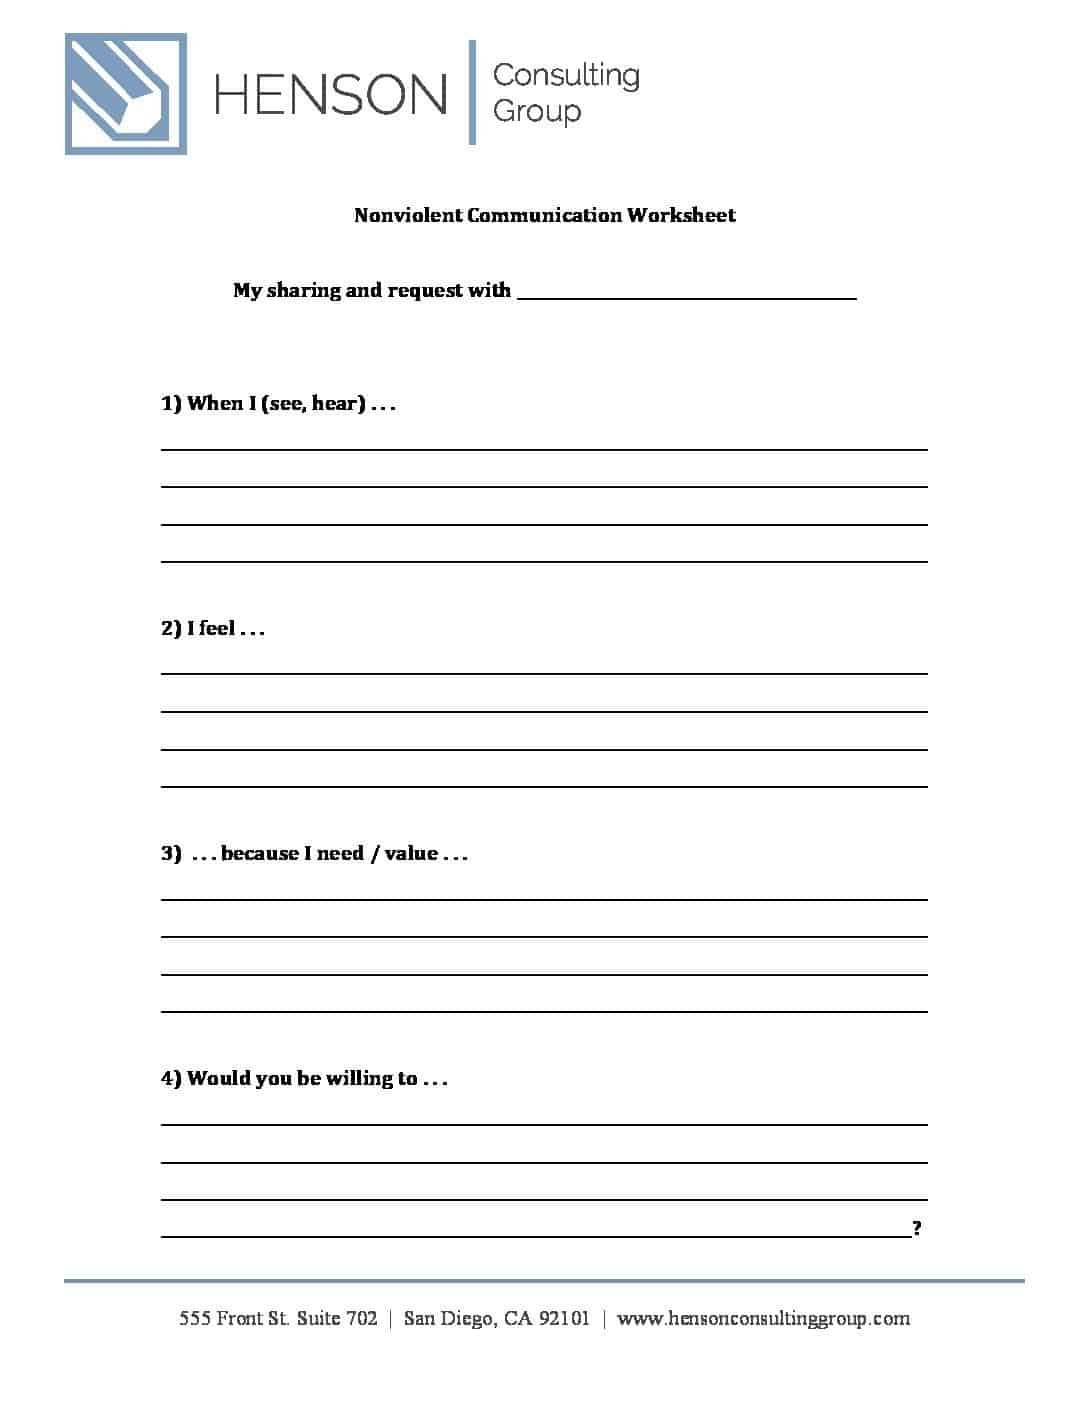 Nonviolentcommunicationworksheethensonconsultinggroup – Henson Throughout Communication Worksheets For Adults Pdf